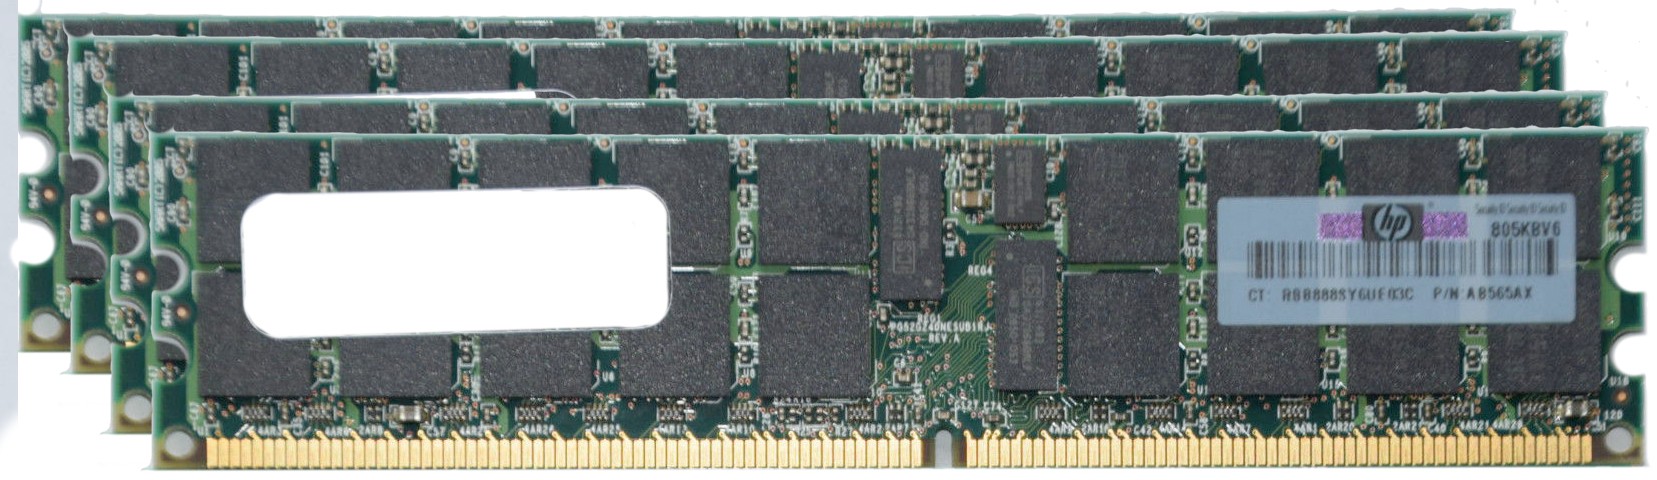 100297-T20-Smart Modular Technologies AB565AX 8GB (4x2GB) PC2-4200 DDR2-667MHz ECC Server RAM-image